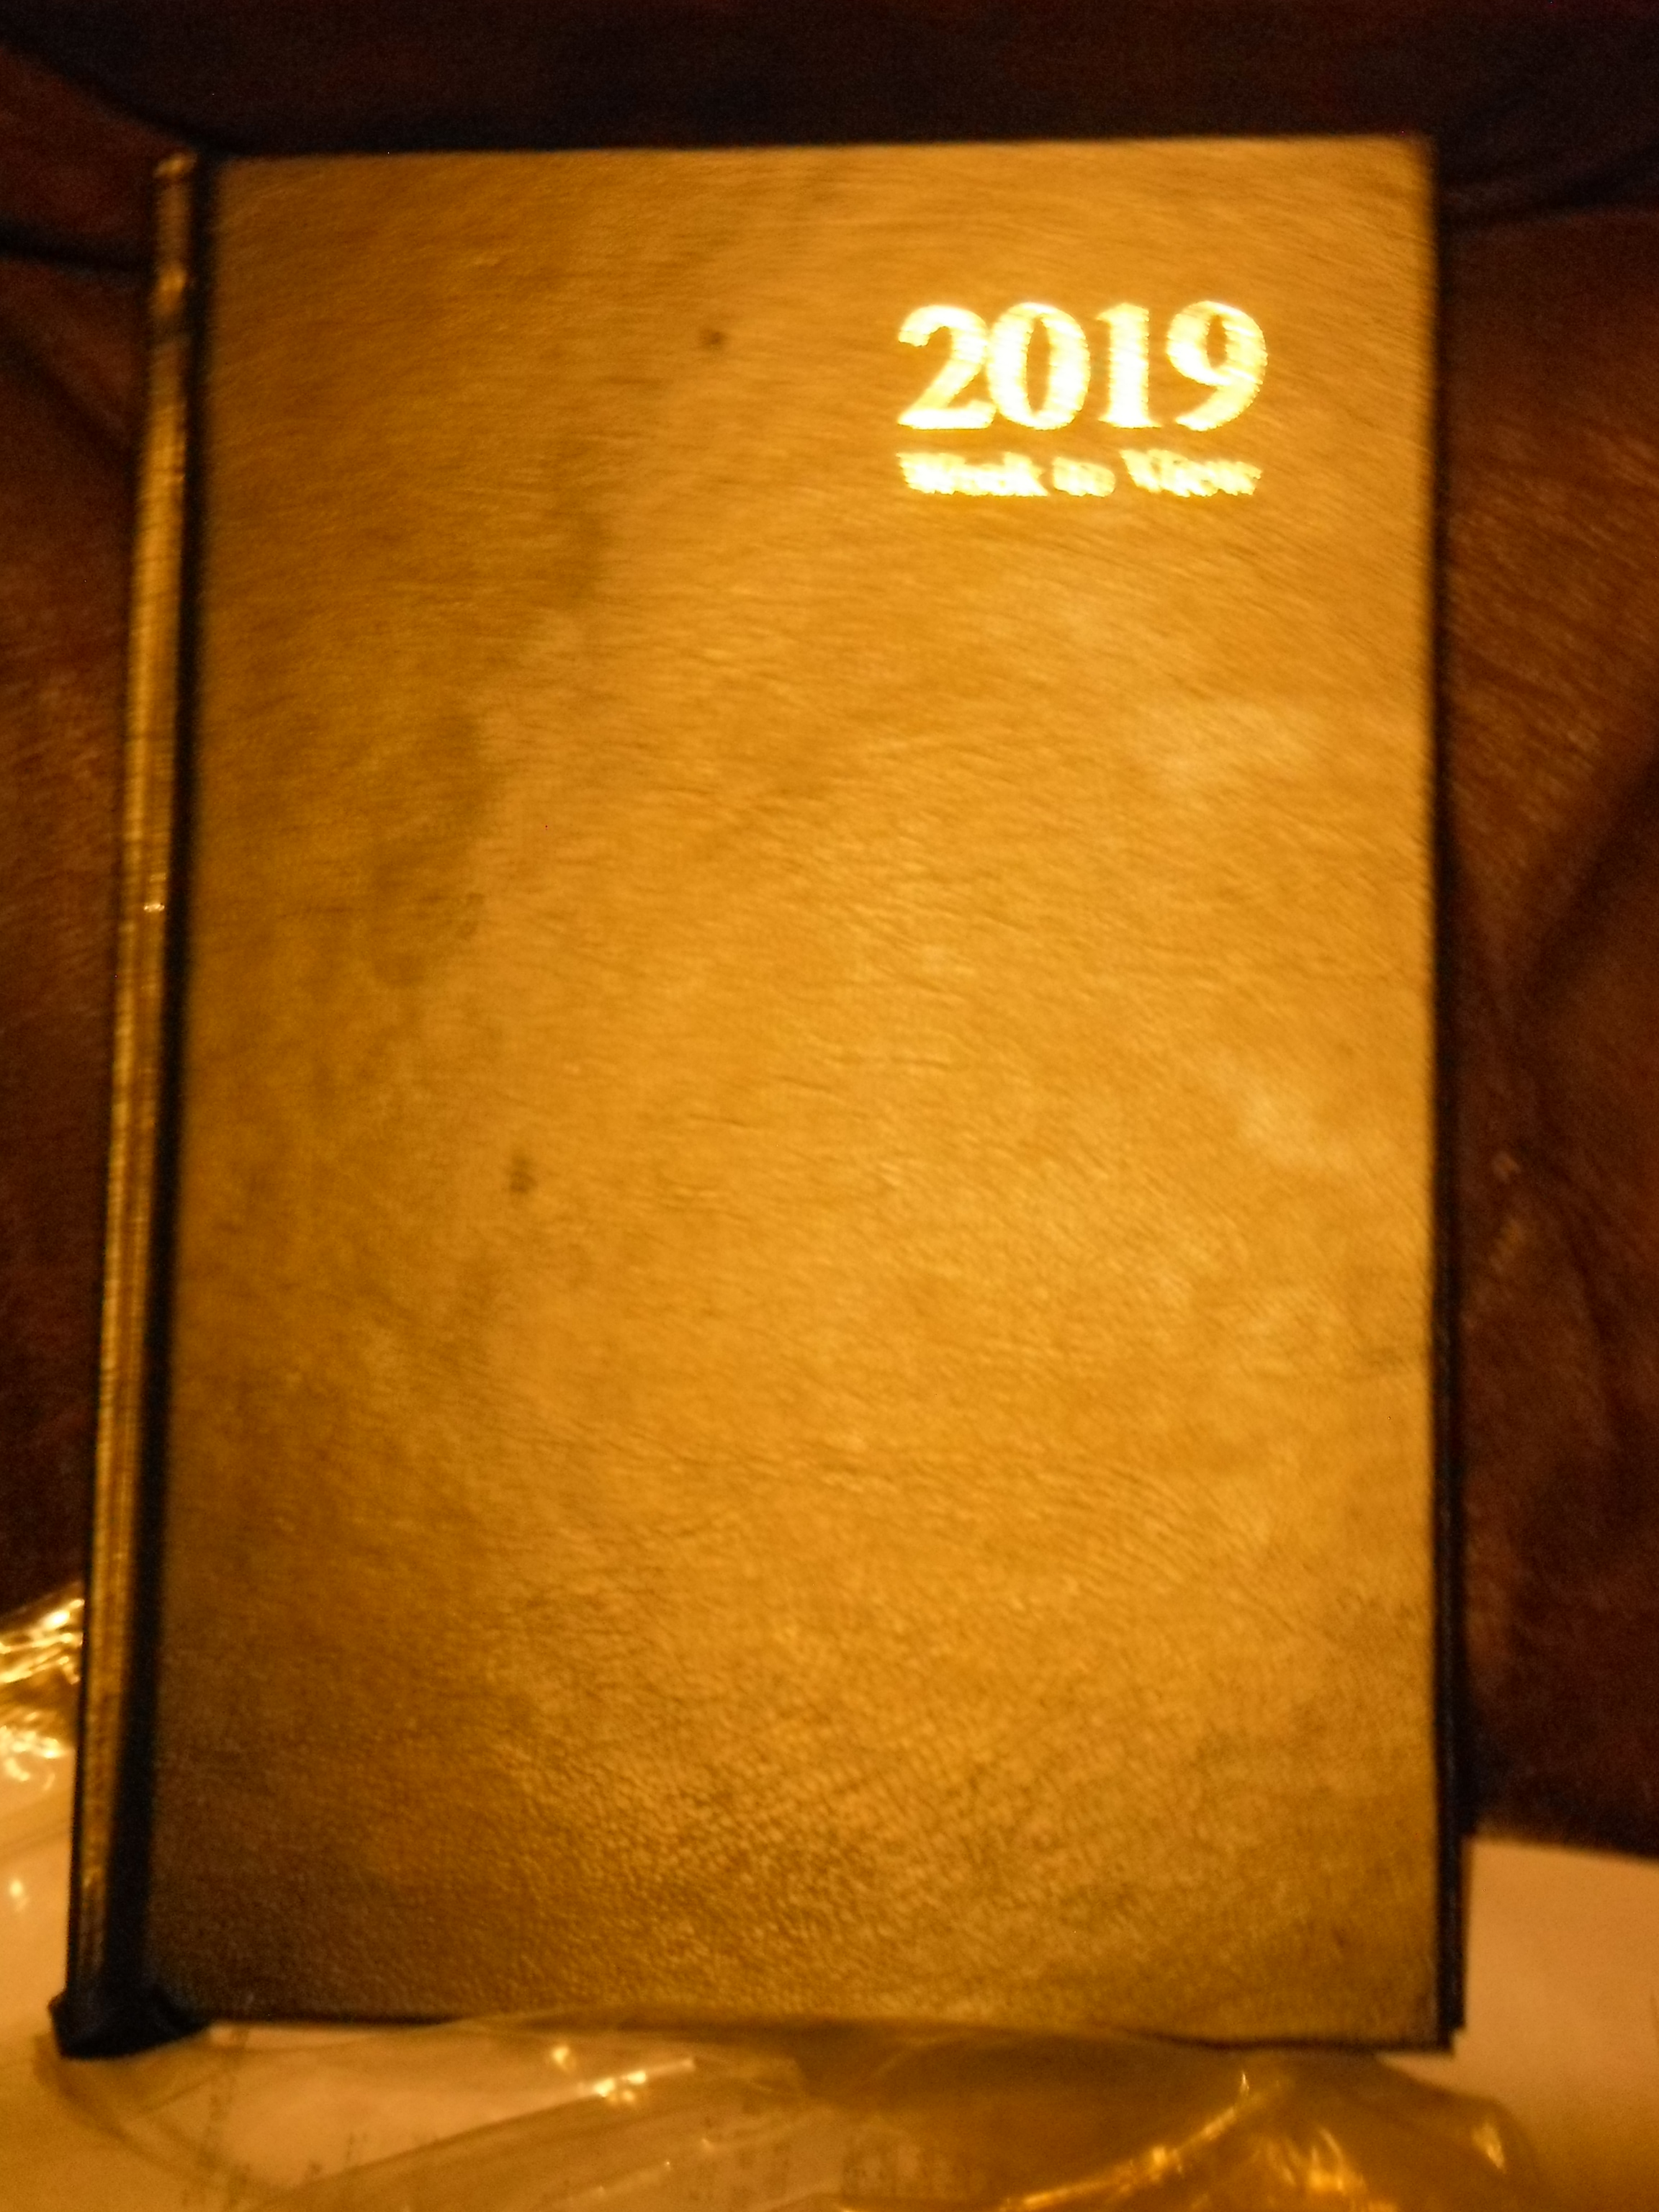 Photo taken by me – my 2019 diary  